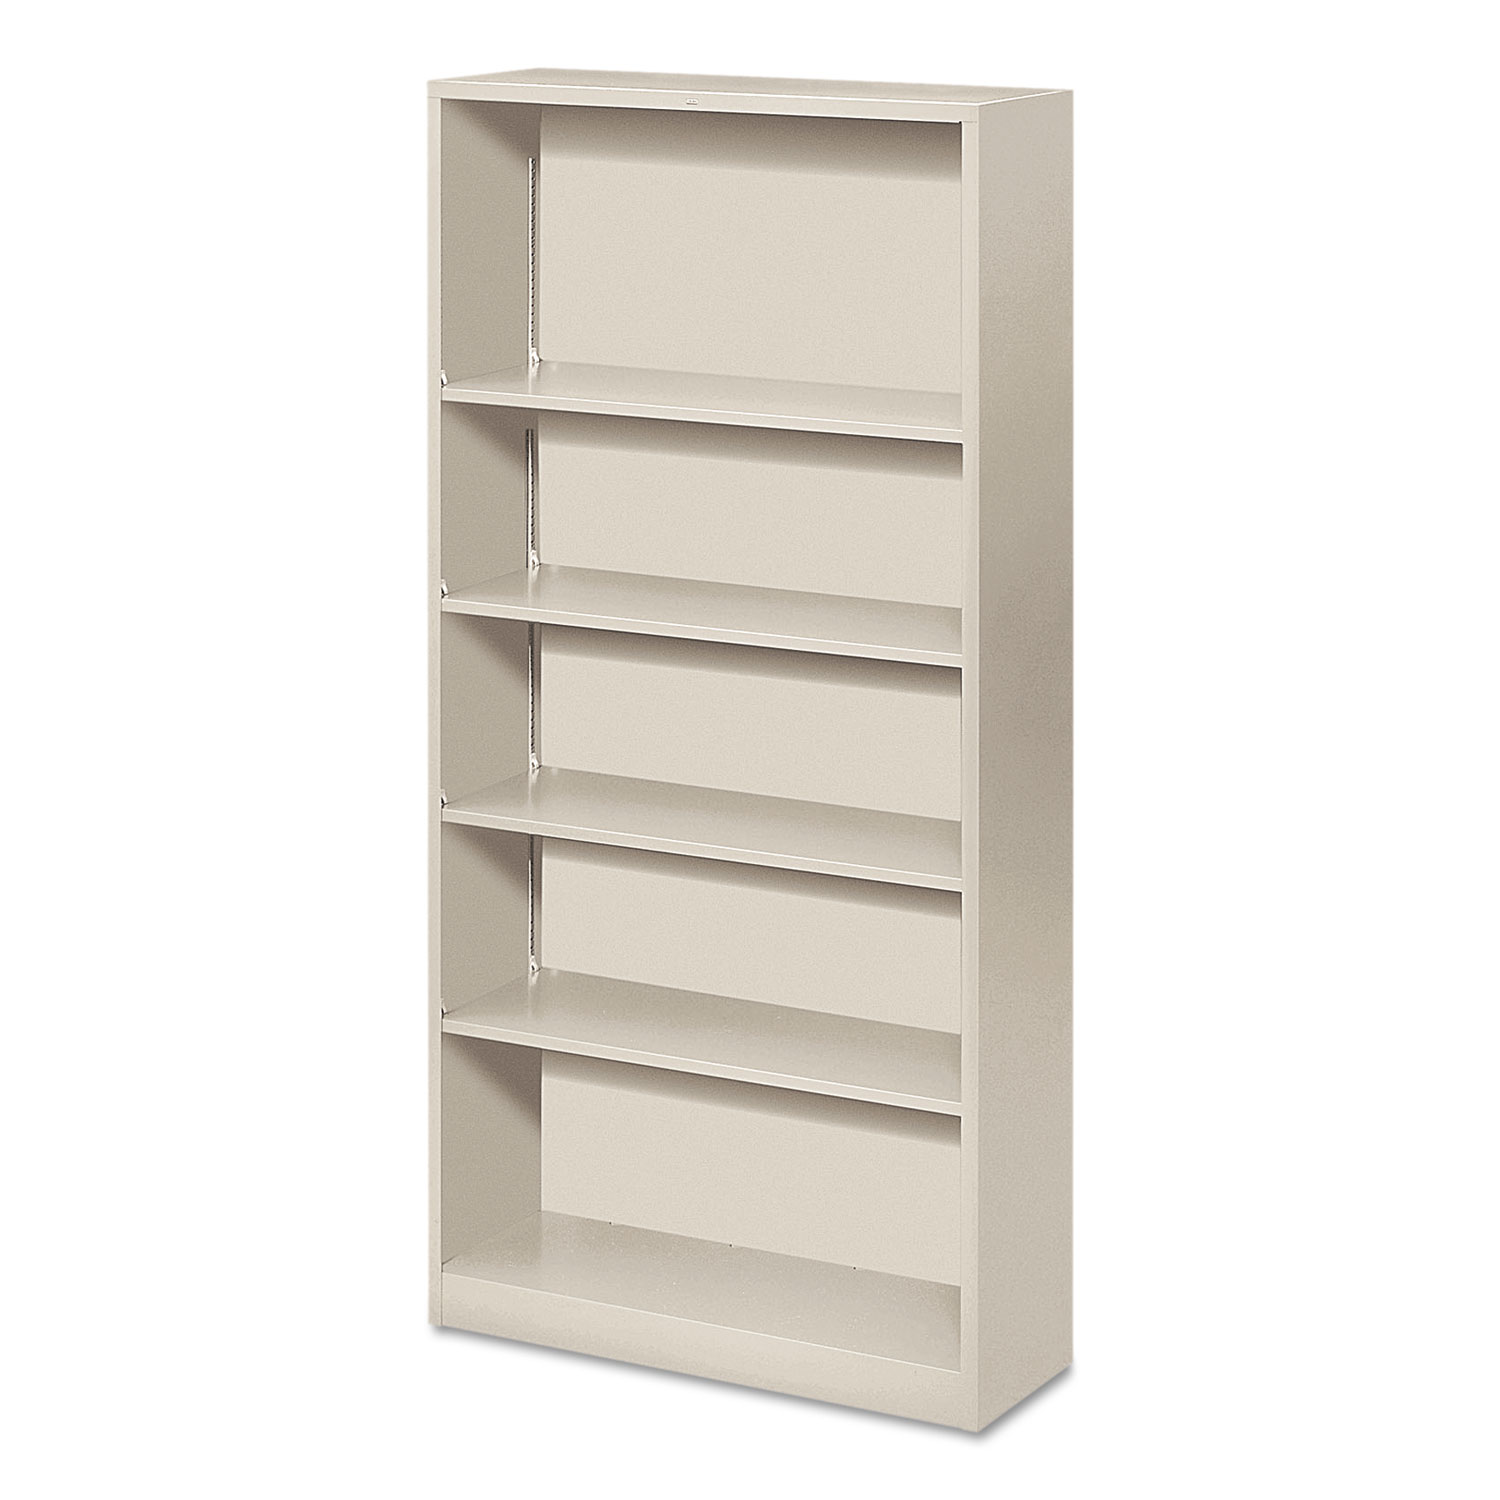  HON HS72ABC.Q Metal Bookcase, Five-Shelf, 34-1/2w x 12-5/8d x 71h, Light Gray (HONS72ABCQ) 